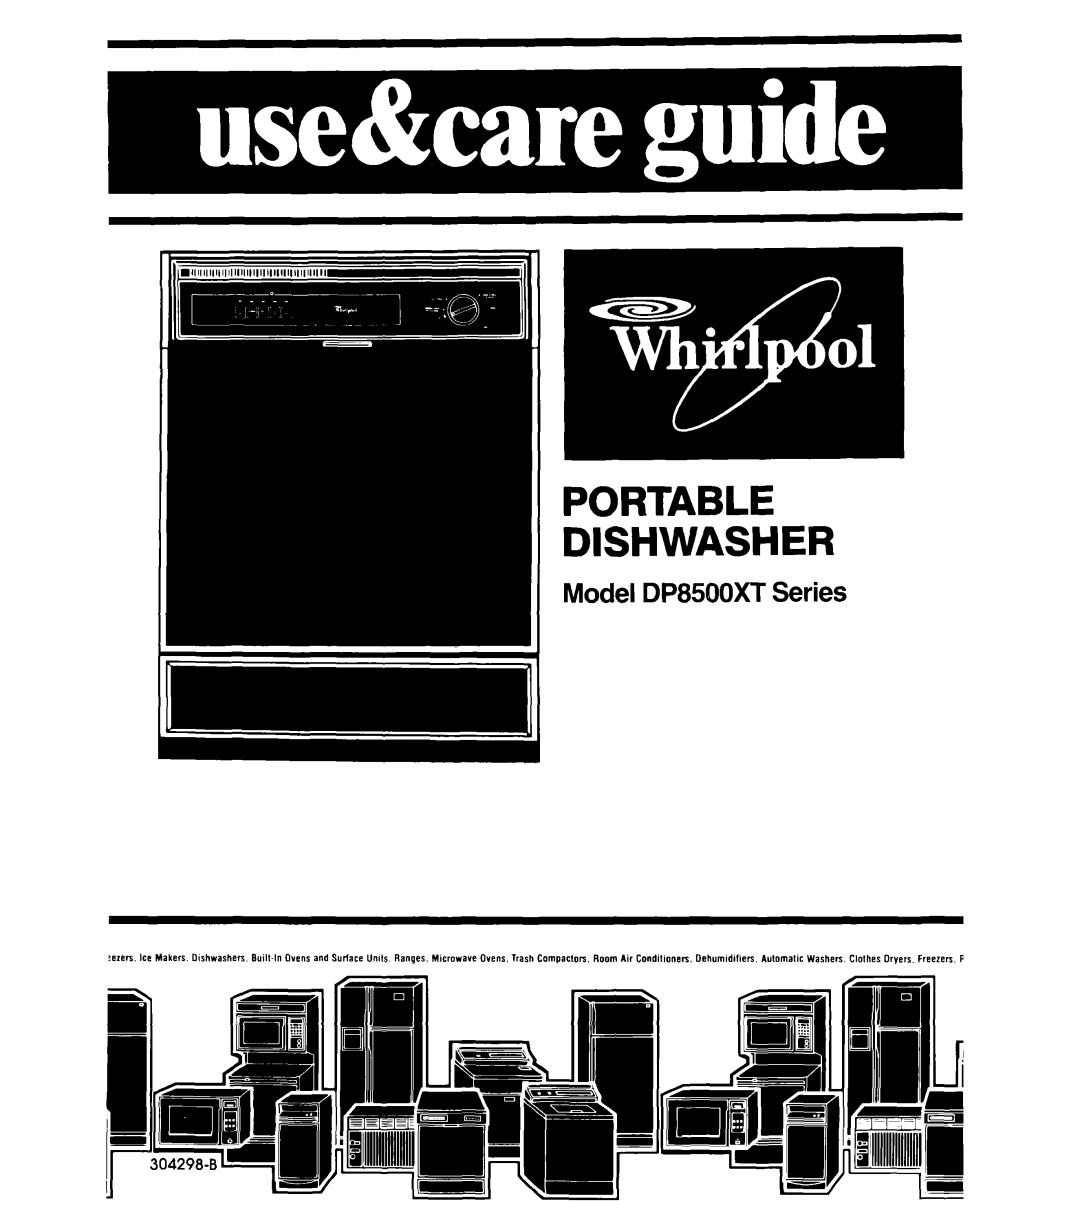 Whirlpool manual Model DP85QOXTSeries, c !11, Portable Dishwasher 